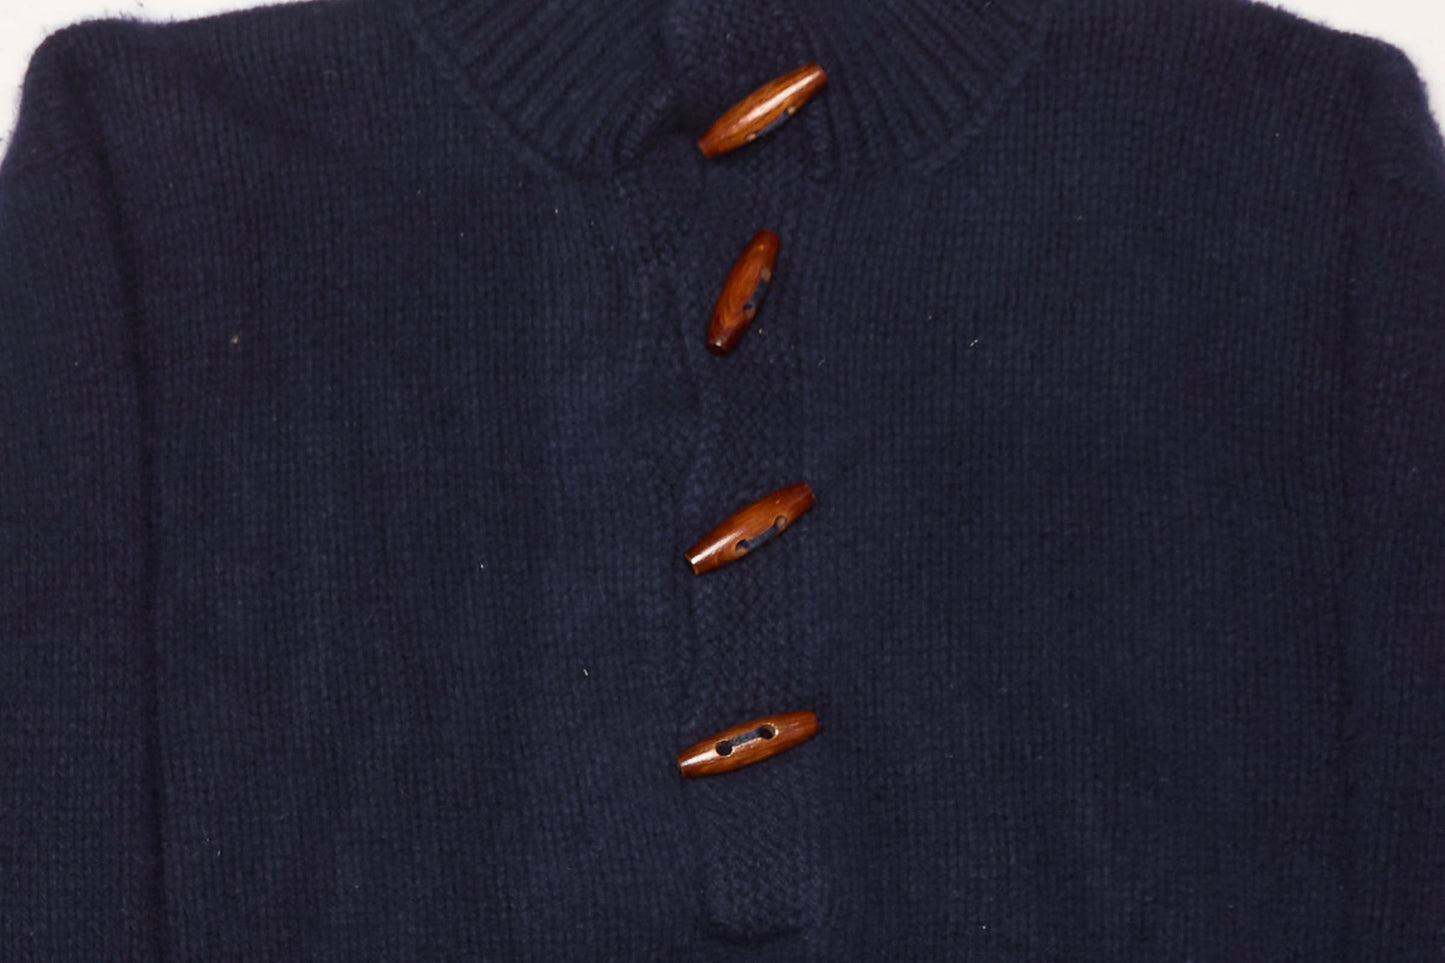 Ralph Lauren V Neck Sweater - M